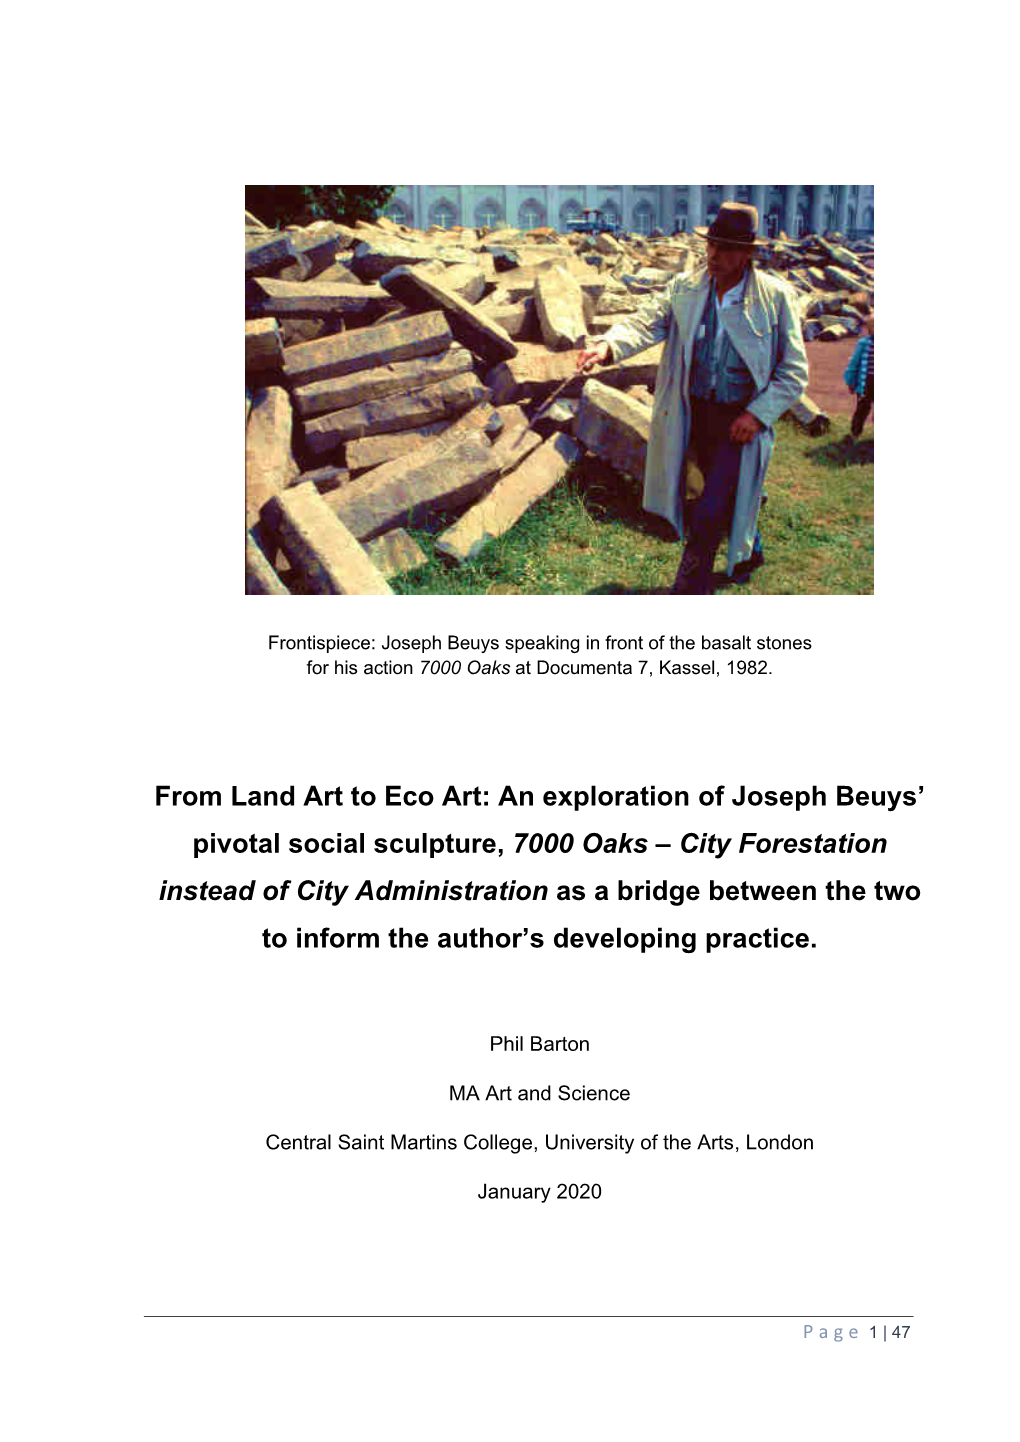 An Exploration of Joseph Beuys' Pivotal Social Sculpture, 7000 Oaks